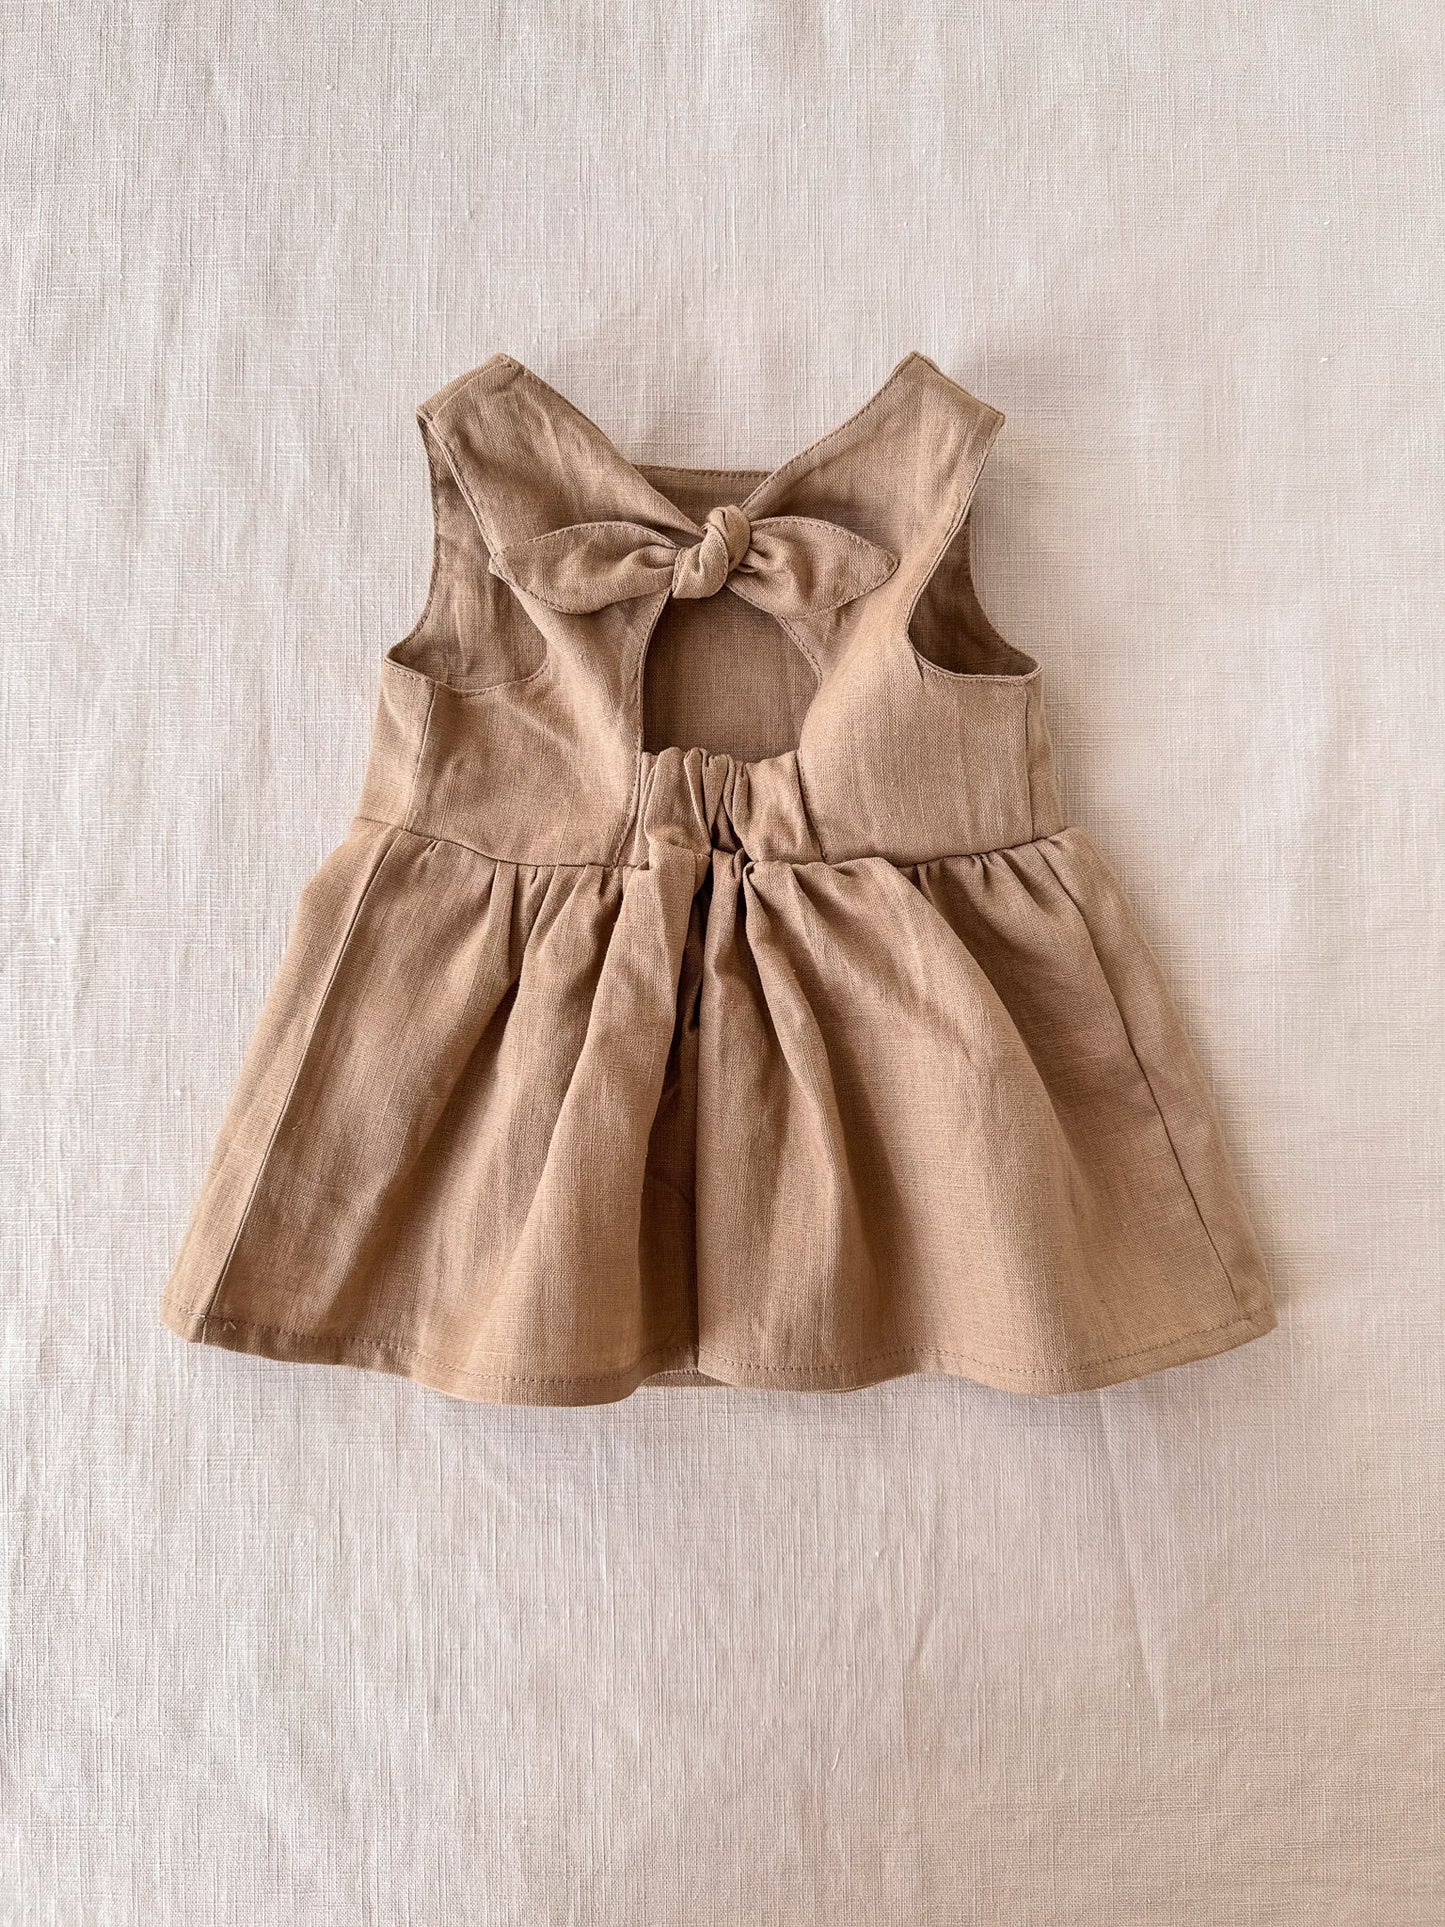 Arabella baby dress / linen - khaki